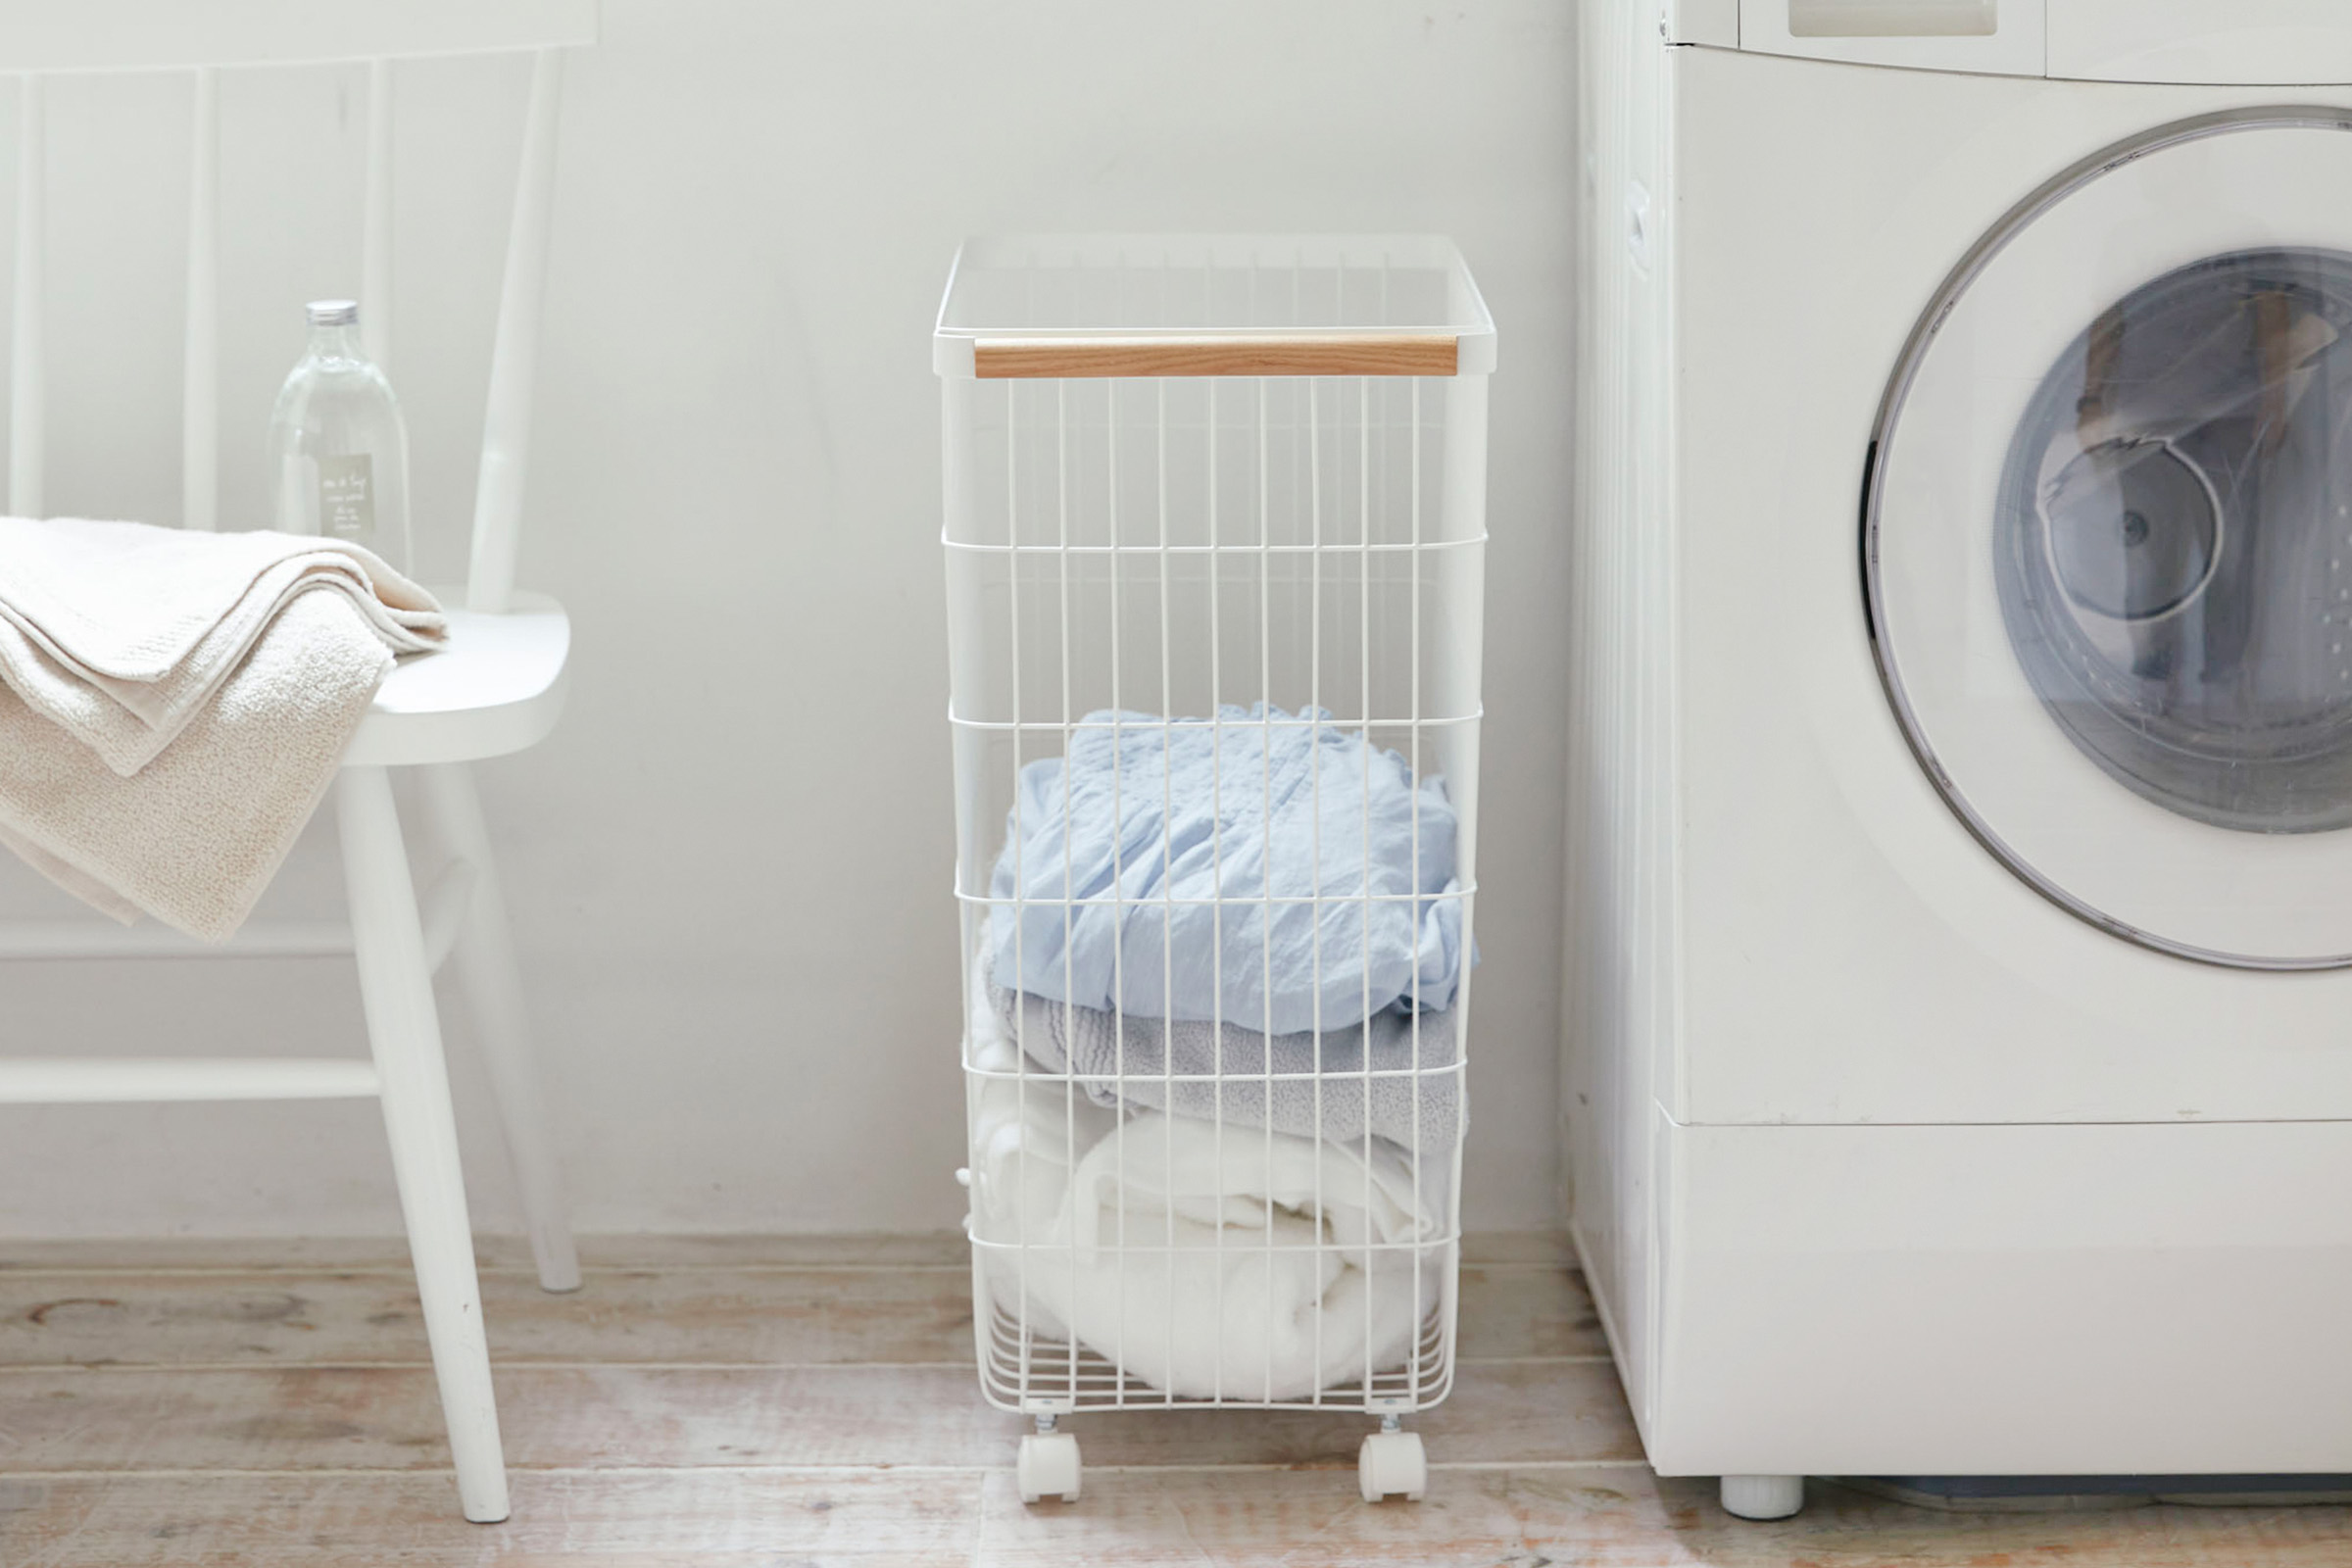 Yamazaki Home Rolling Wire Basket filled with laundry beside a washing machine